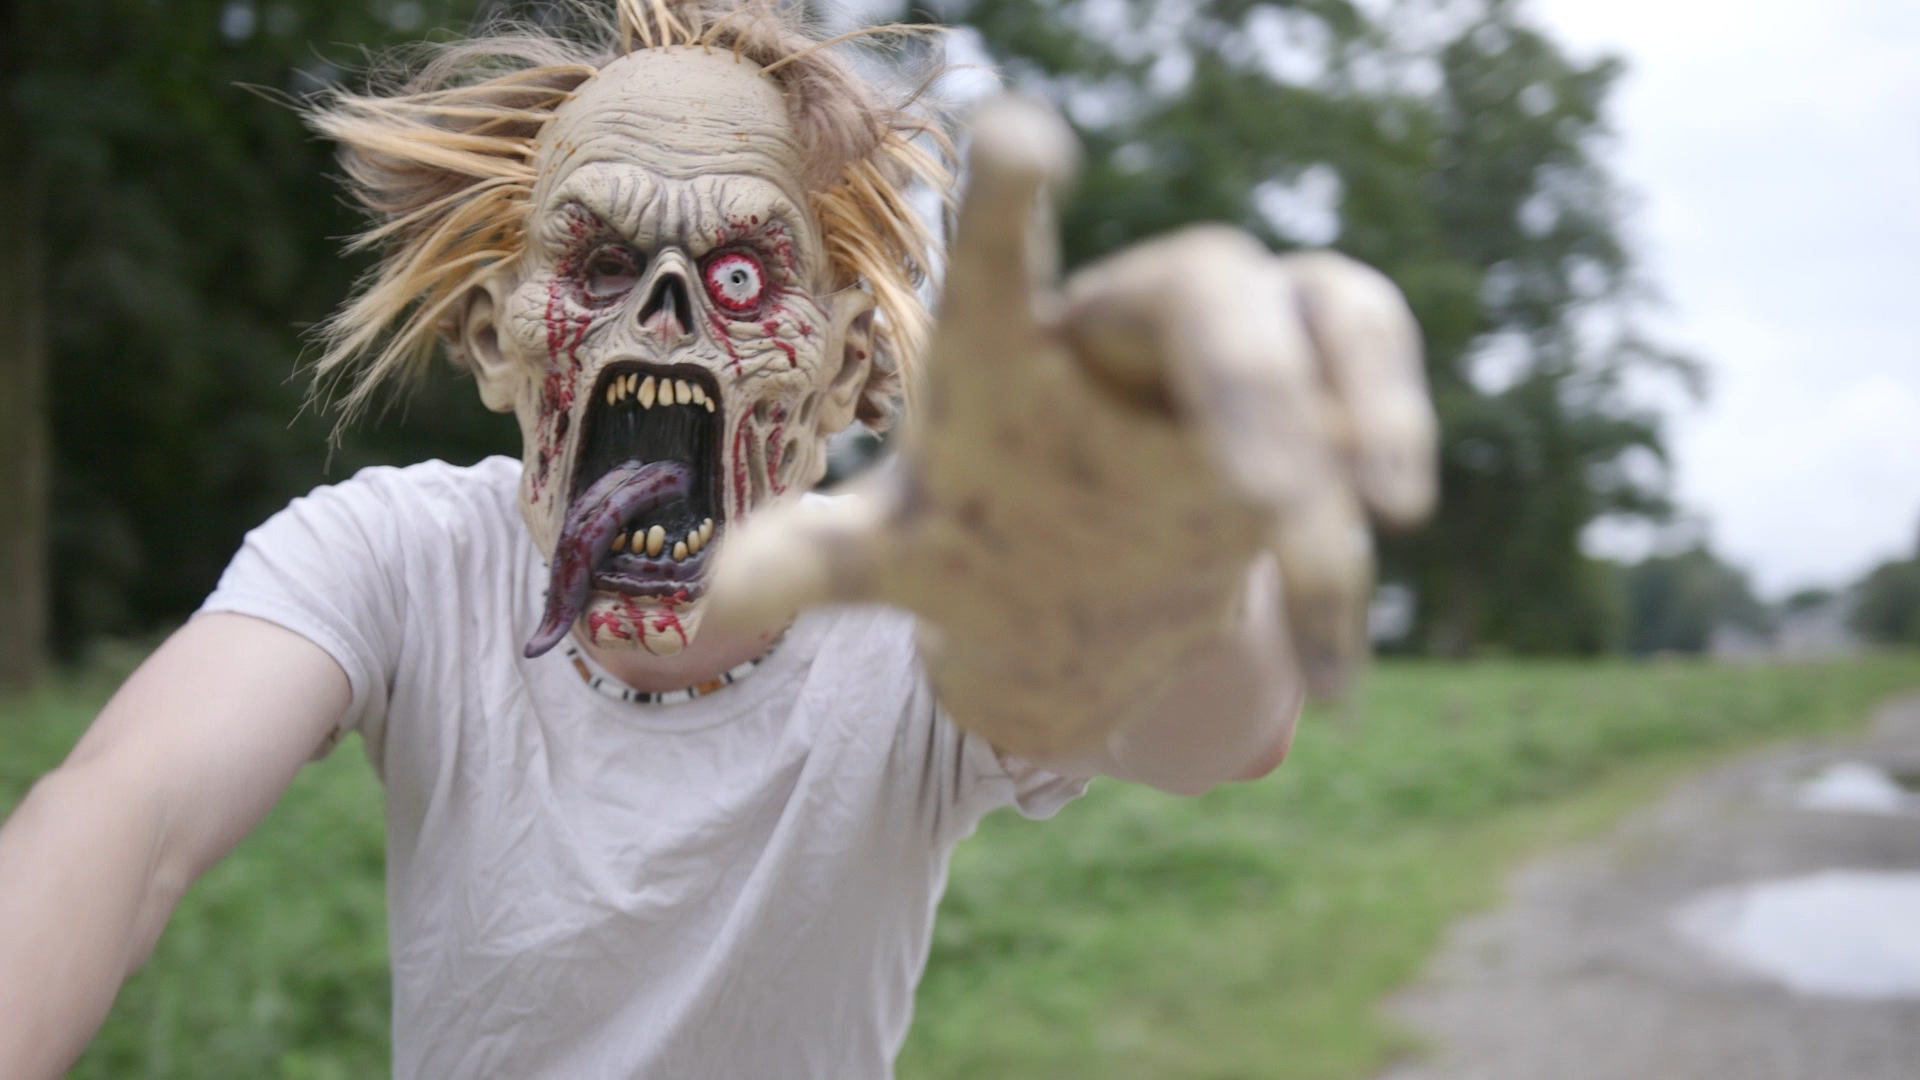 Emerging Zombie | Premium Halloween Mask, Prop, & Decor